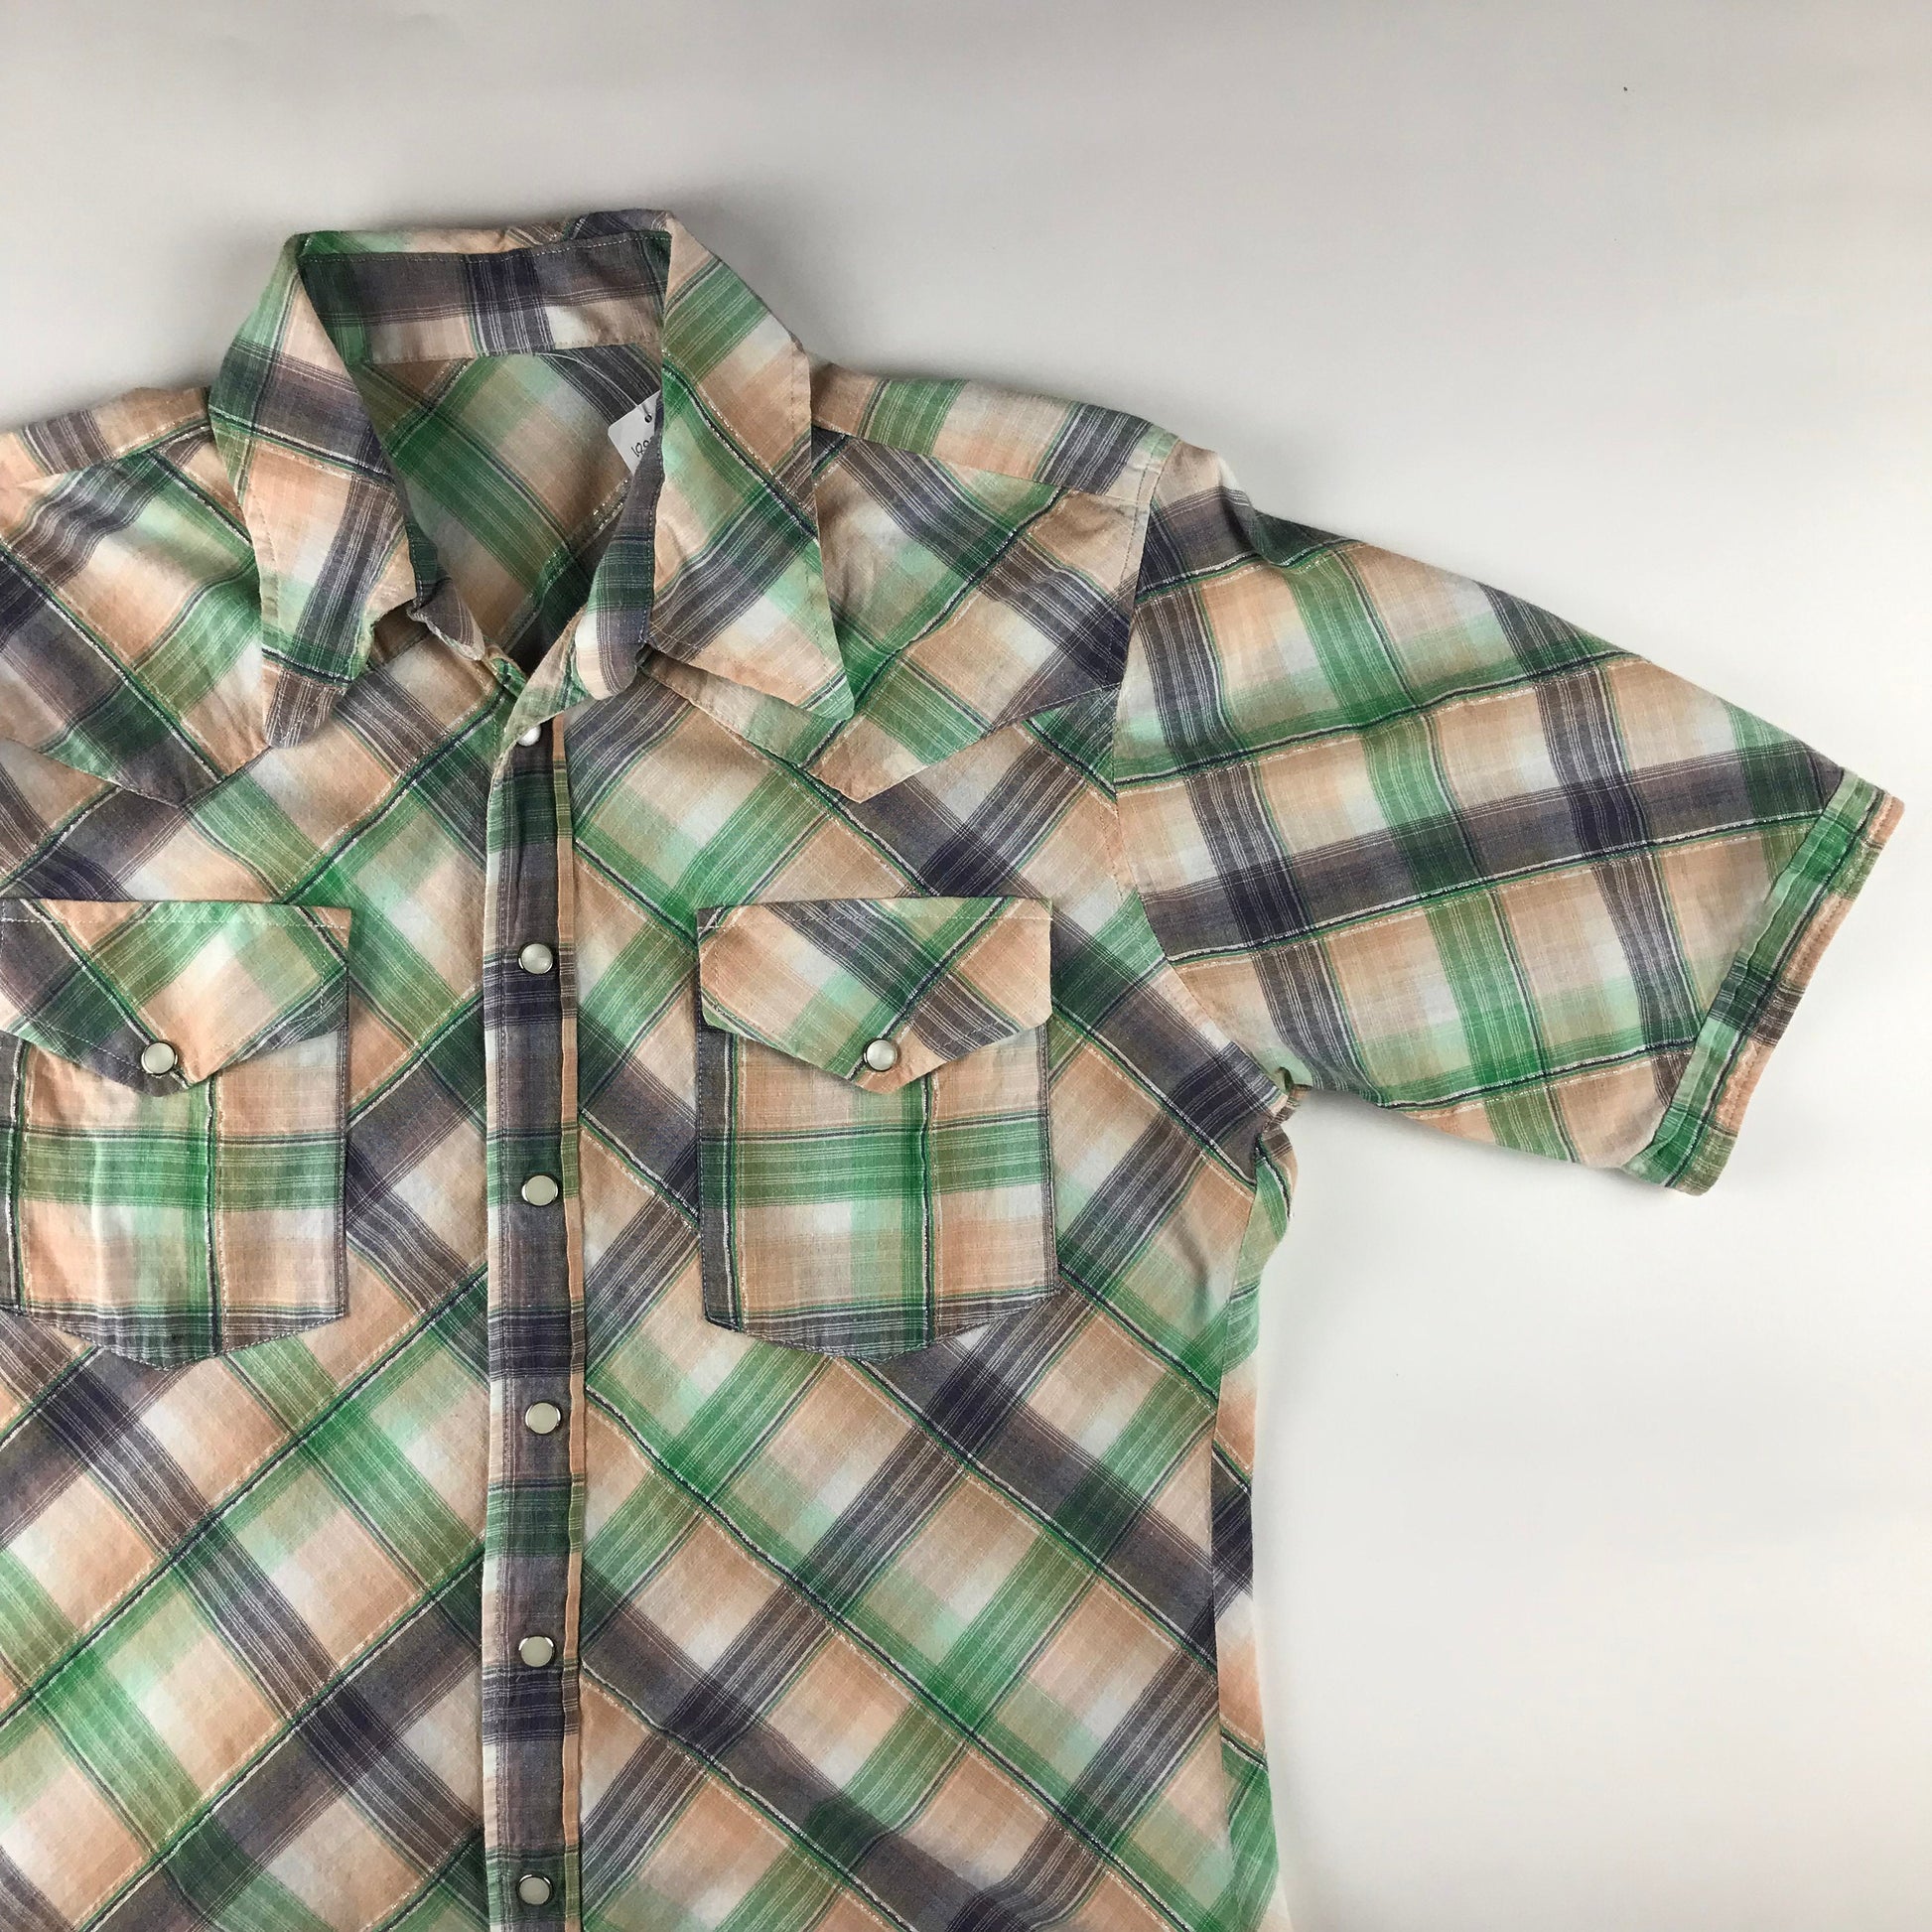 1970s/1980s Short Sleeve Western Shirt Size S/M